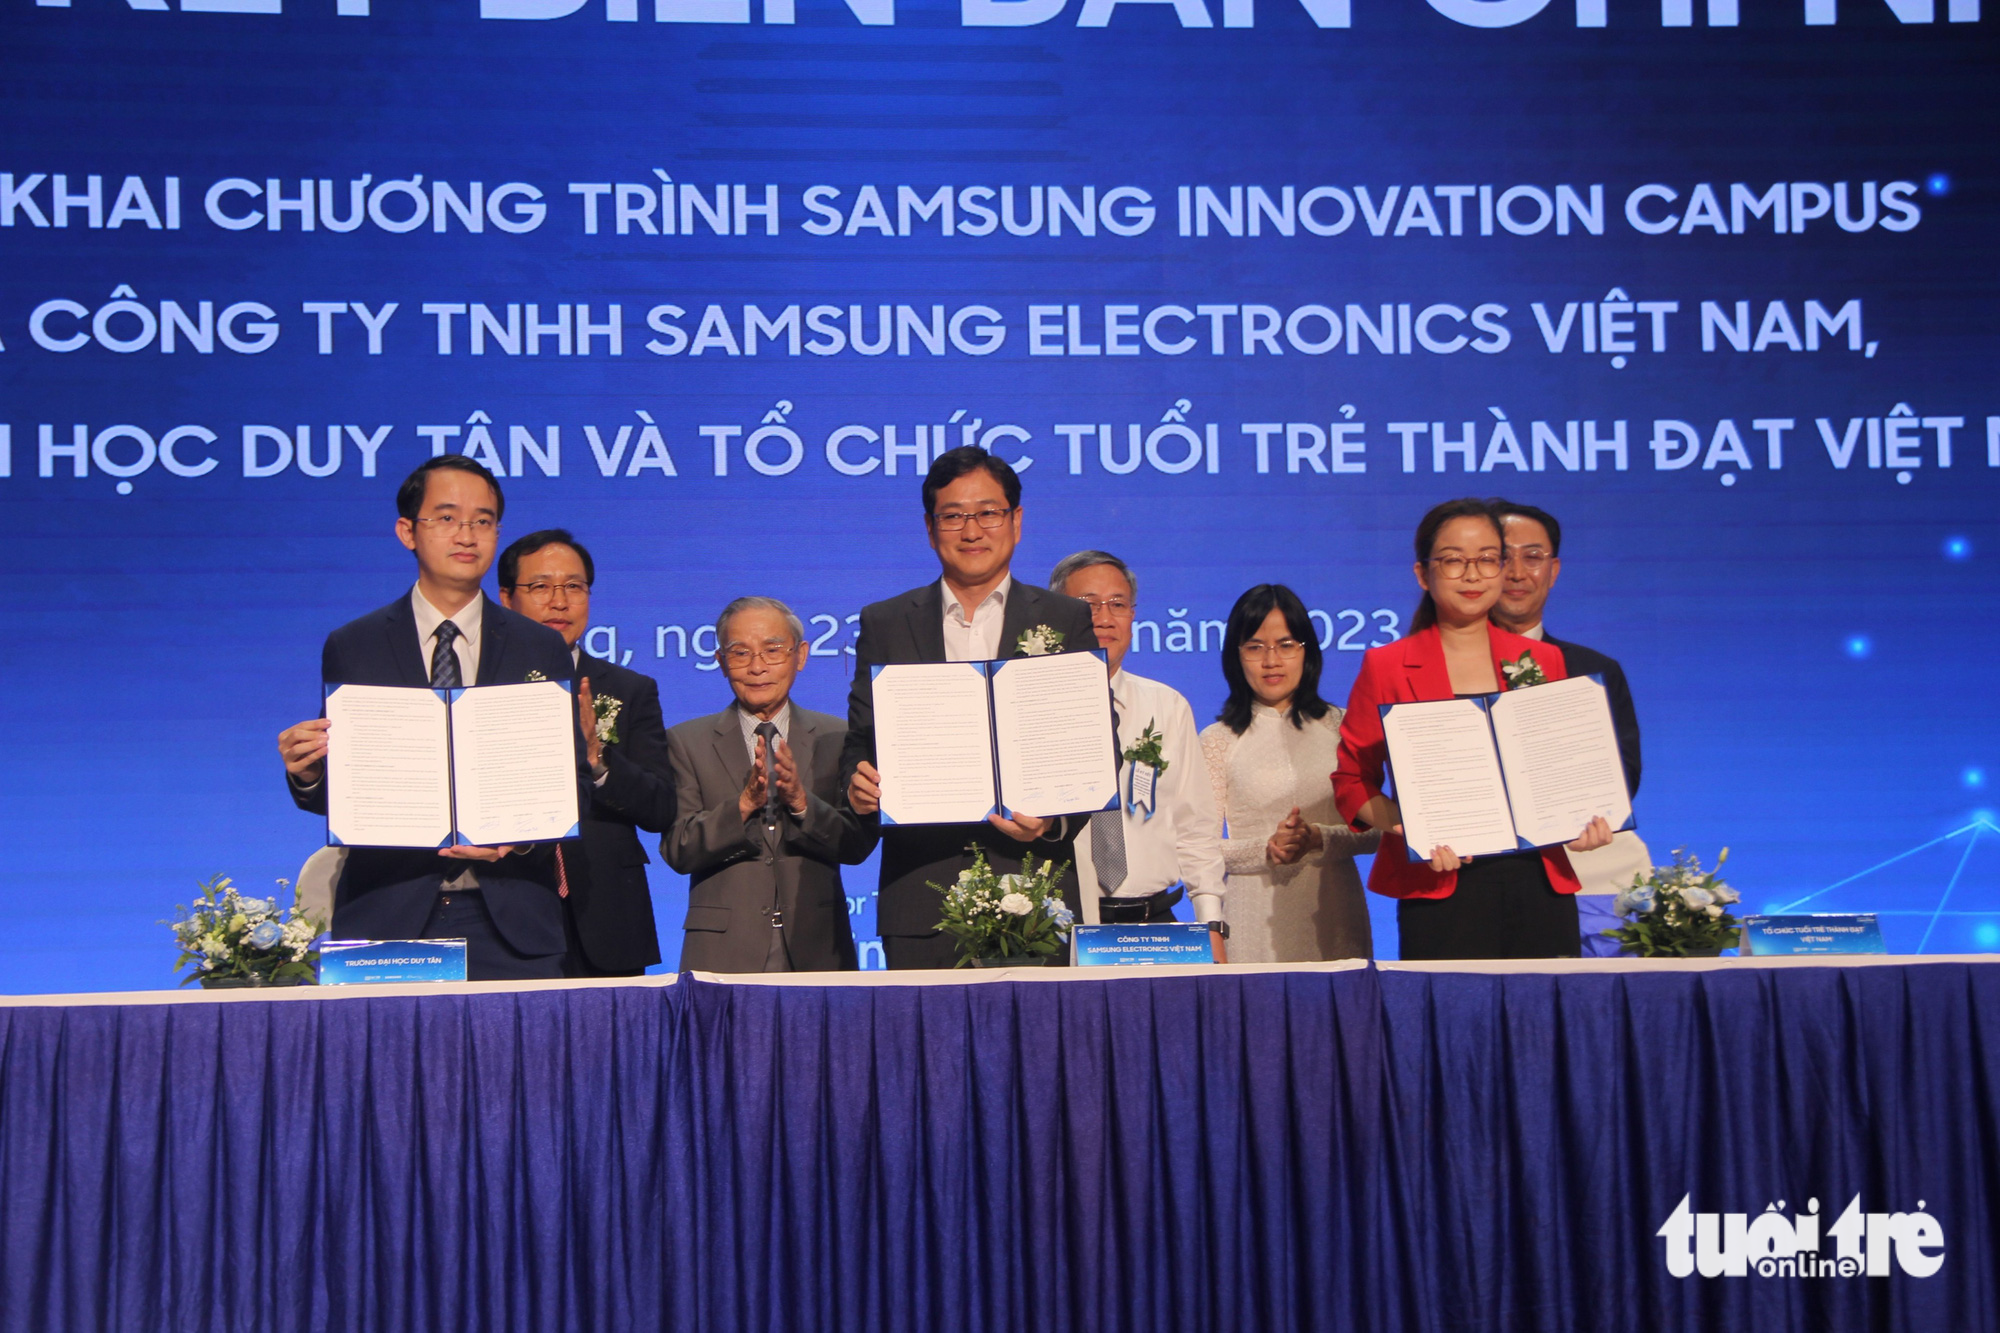 Representatives of Samsung Vietnam, Junior Achievement Vietnam, and Duy Tan University sign a Memorandum of Understanding to launch the Samsung Innovation Campus program in Da Nang City, central Vietnam on May 23, 2023. Photo: Truong Trung / Tuoi Tre